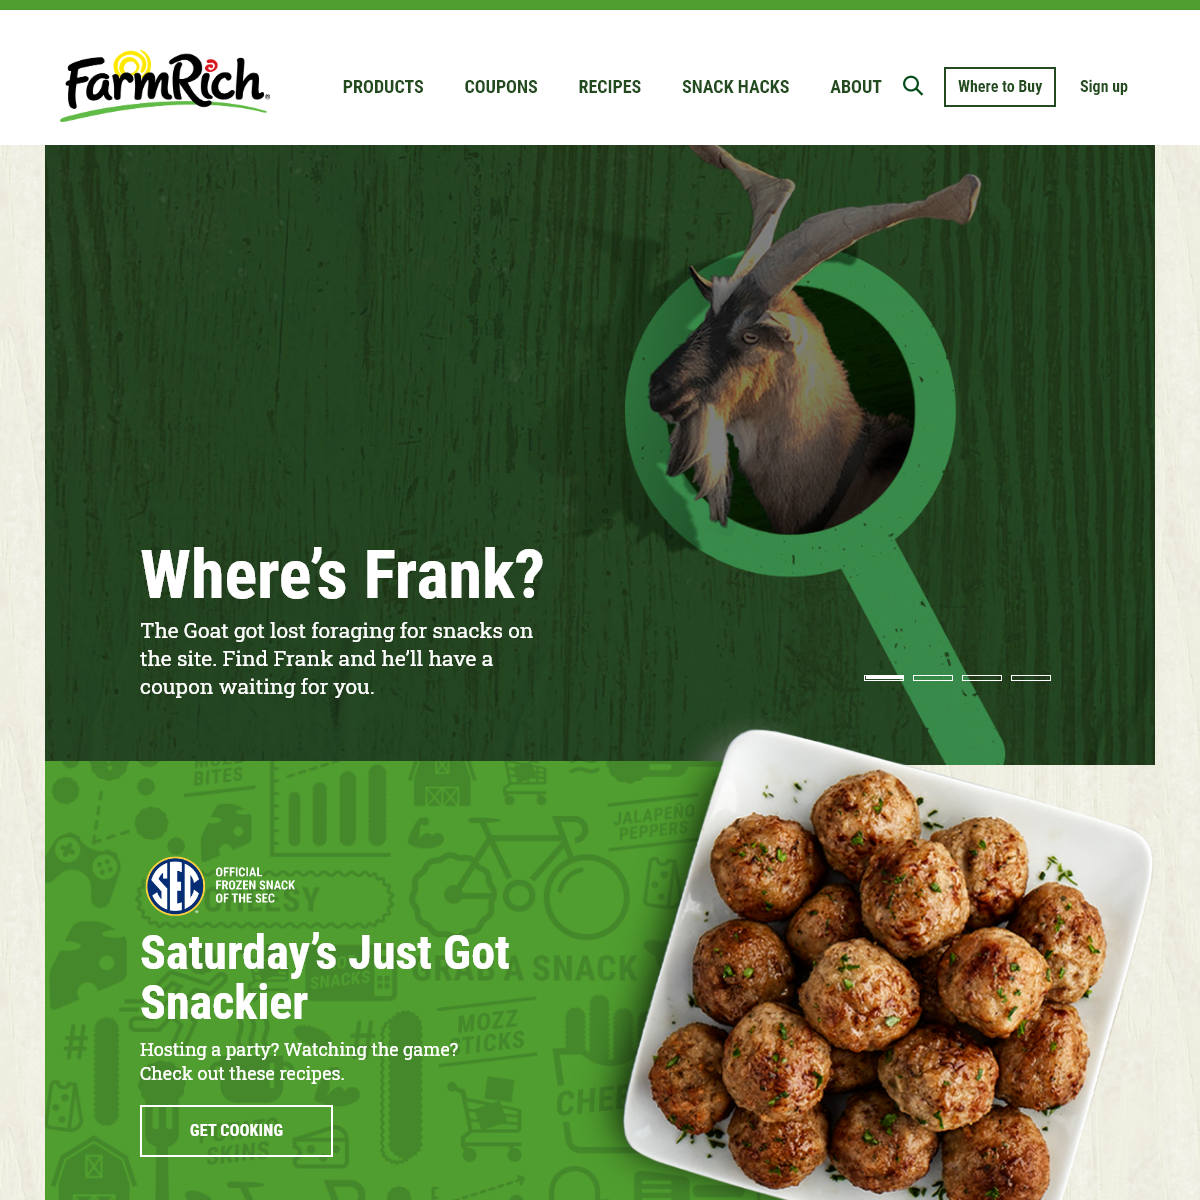 A complete backup of farmrich.com